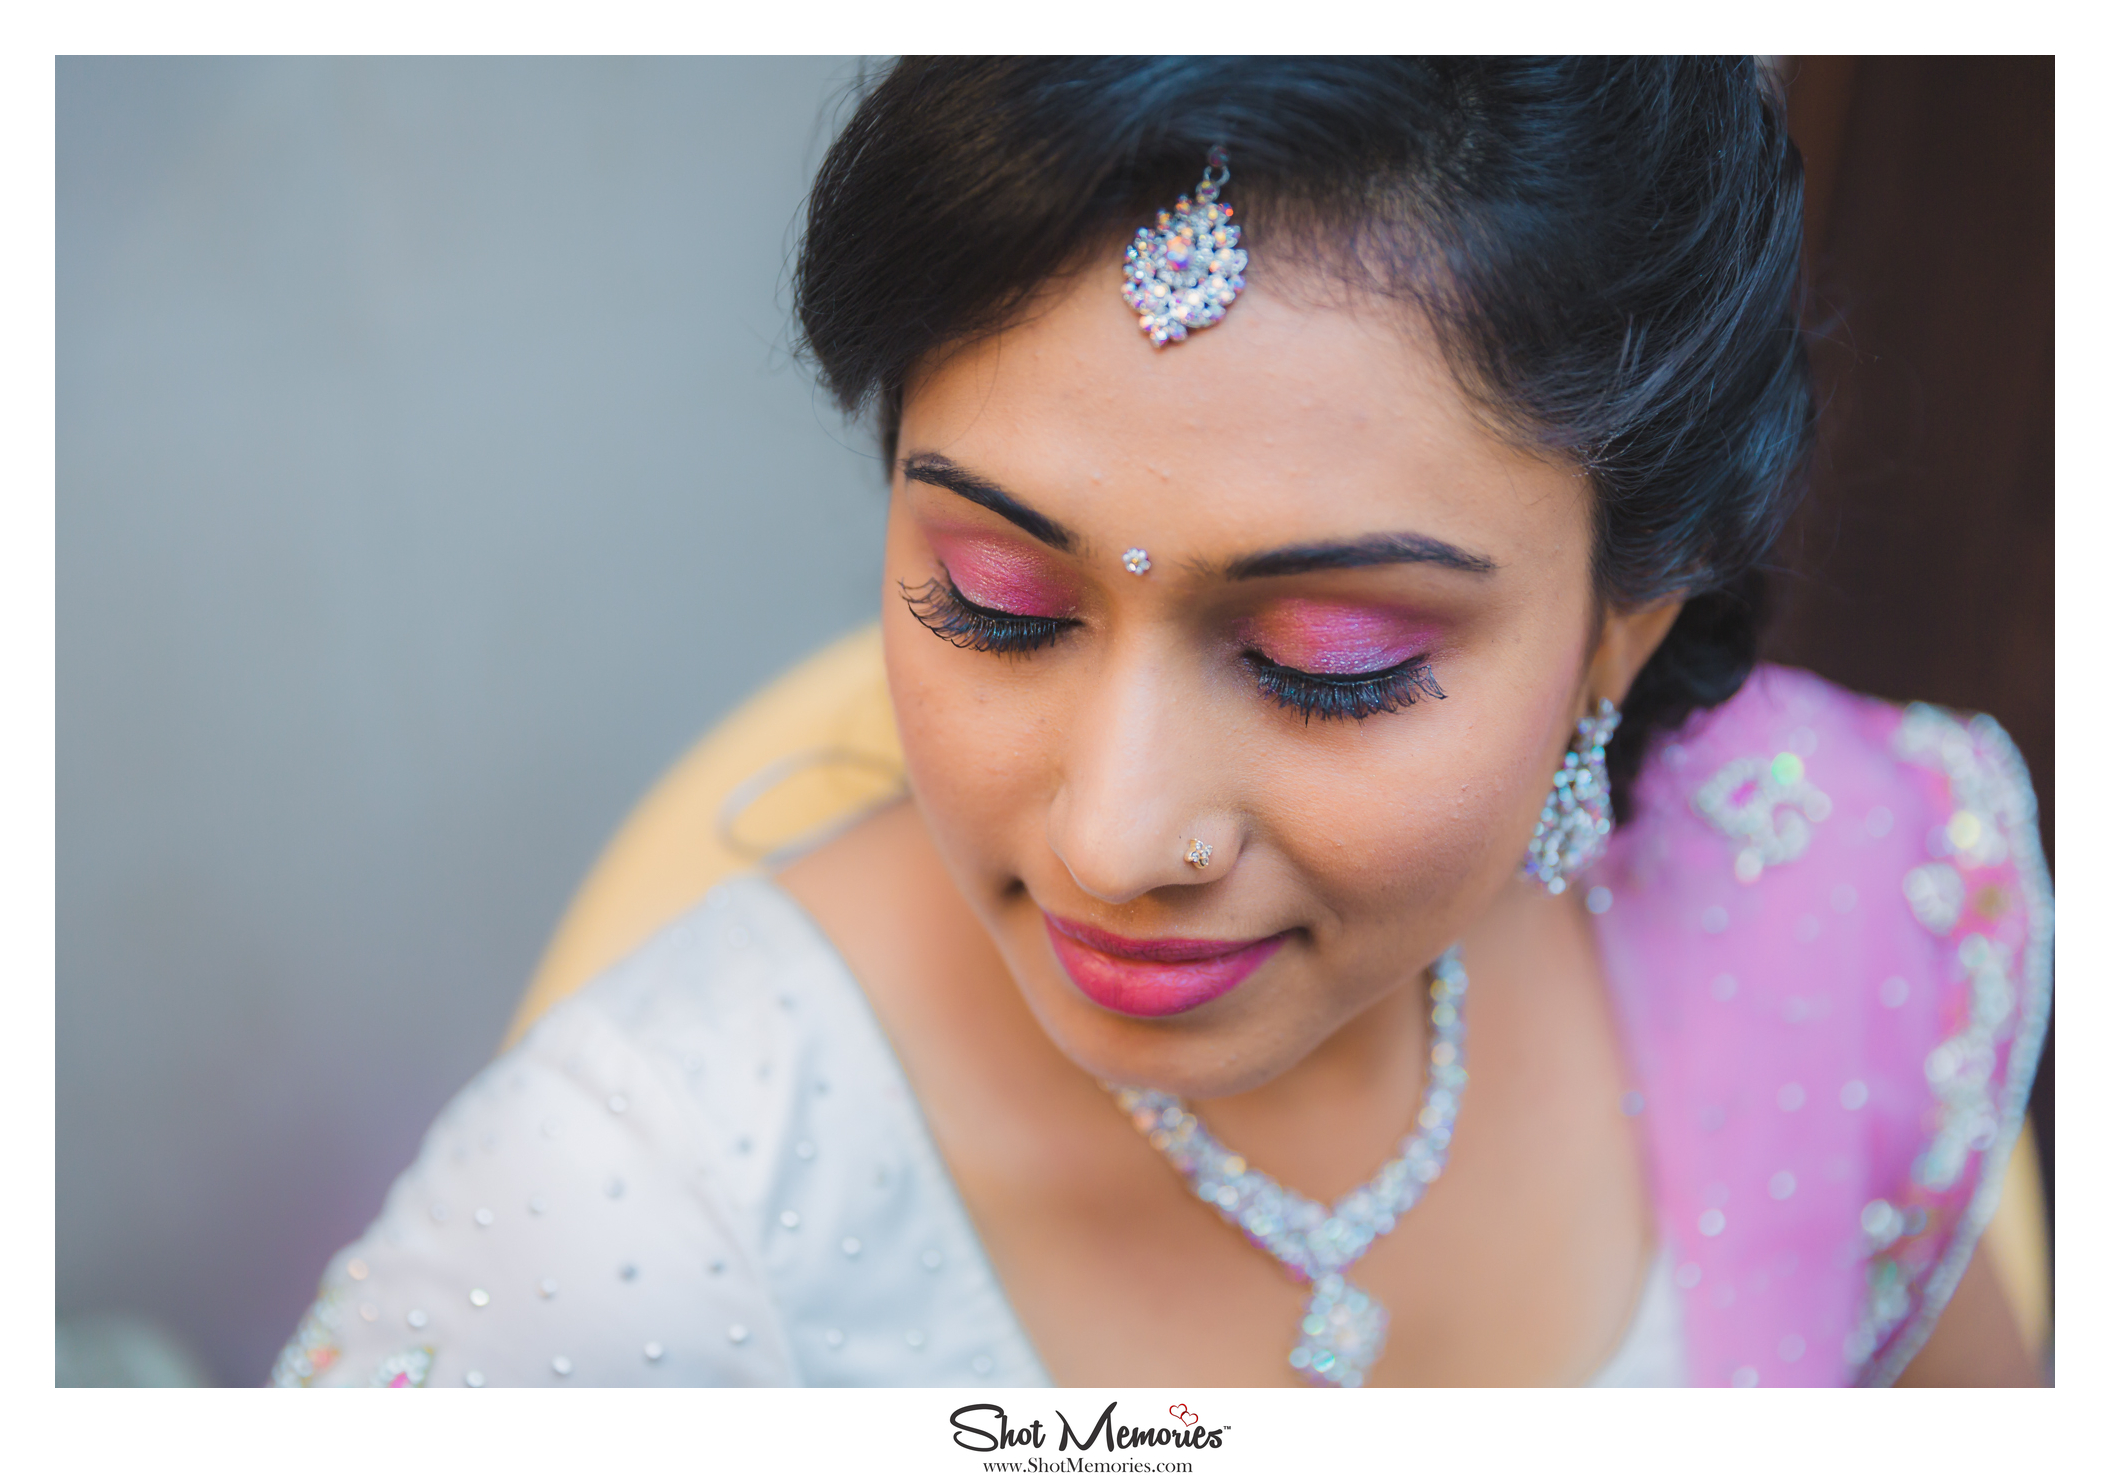 Best Wedding Photography in Chennai - Shot Memories